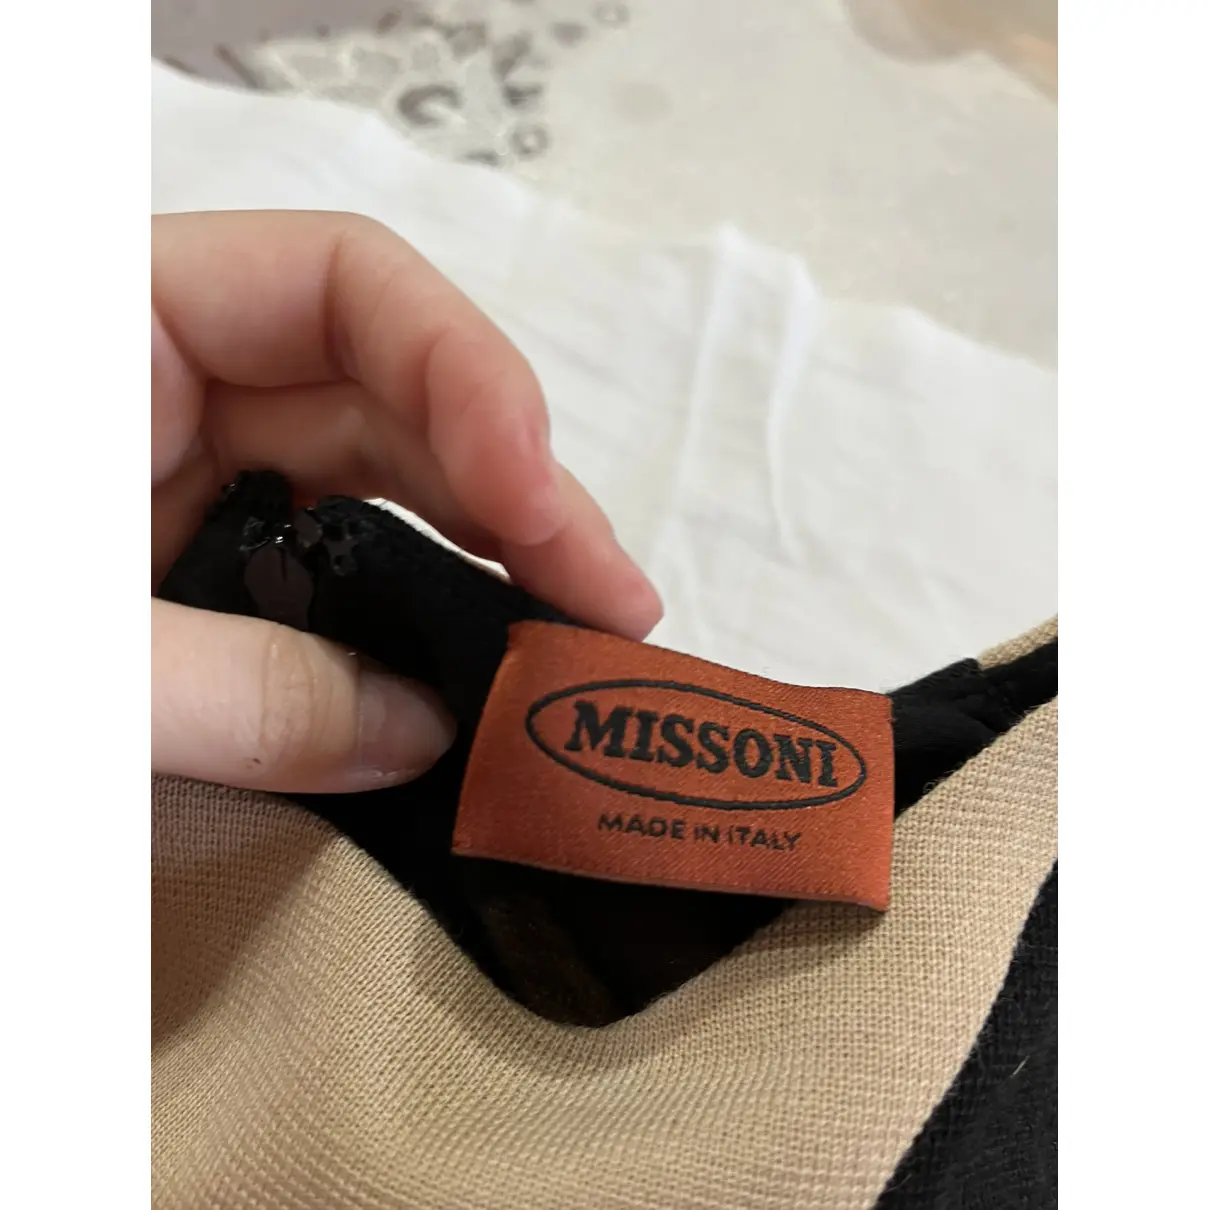 Buy Missoni Corset online